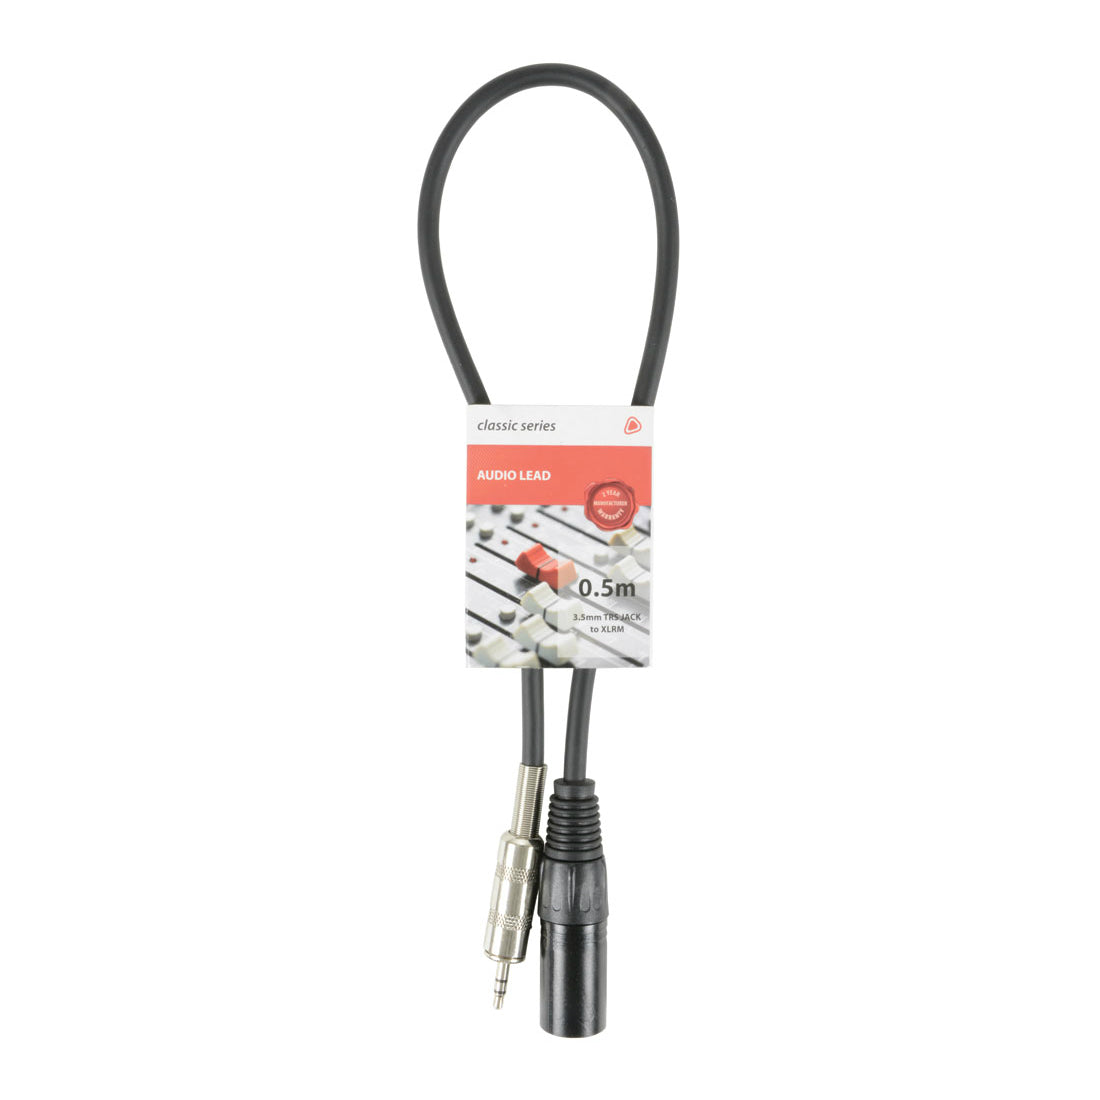 AVSL 3.5mm Mini Jack to XLR Male Cable - 0.5m (190065)